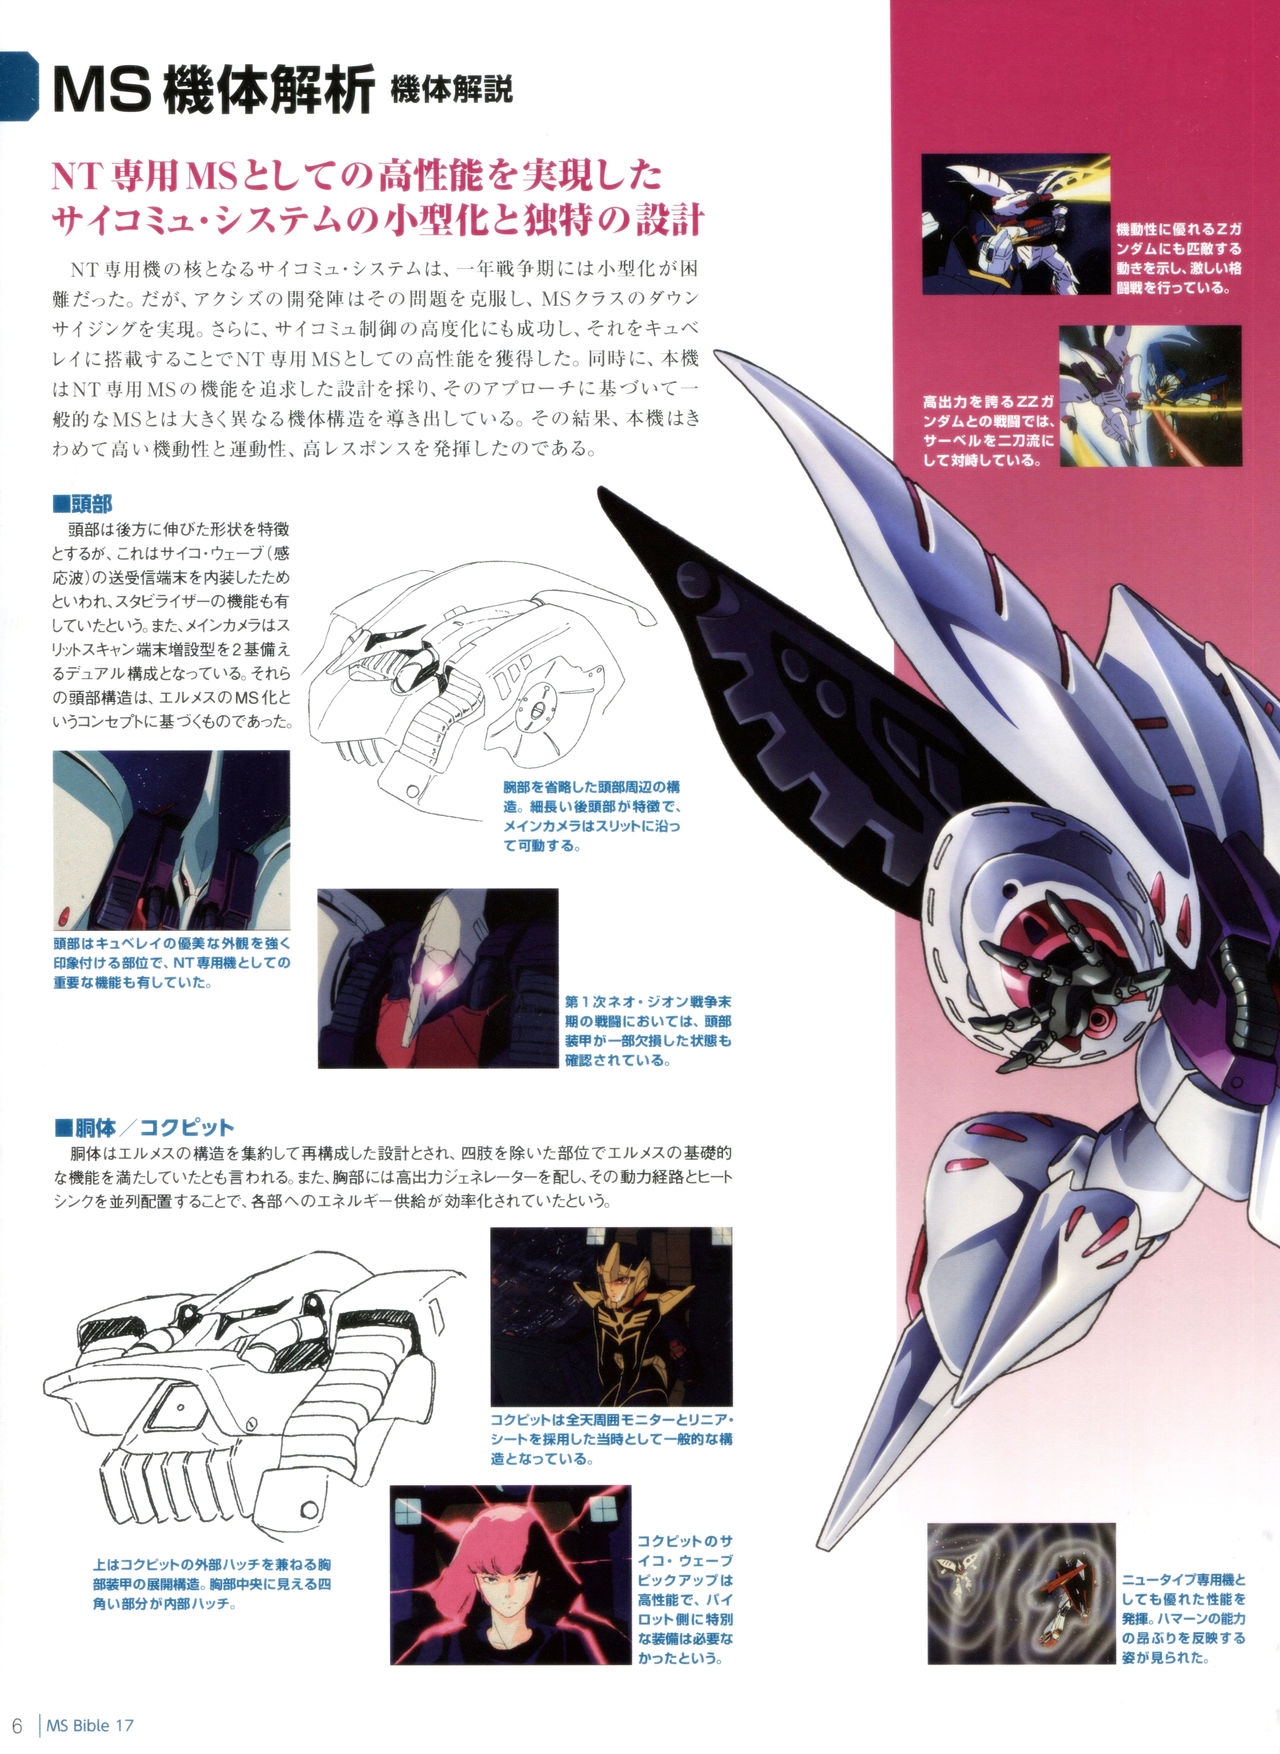 Gundam Mobile Suit Bible 17 7